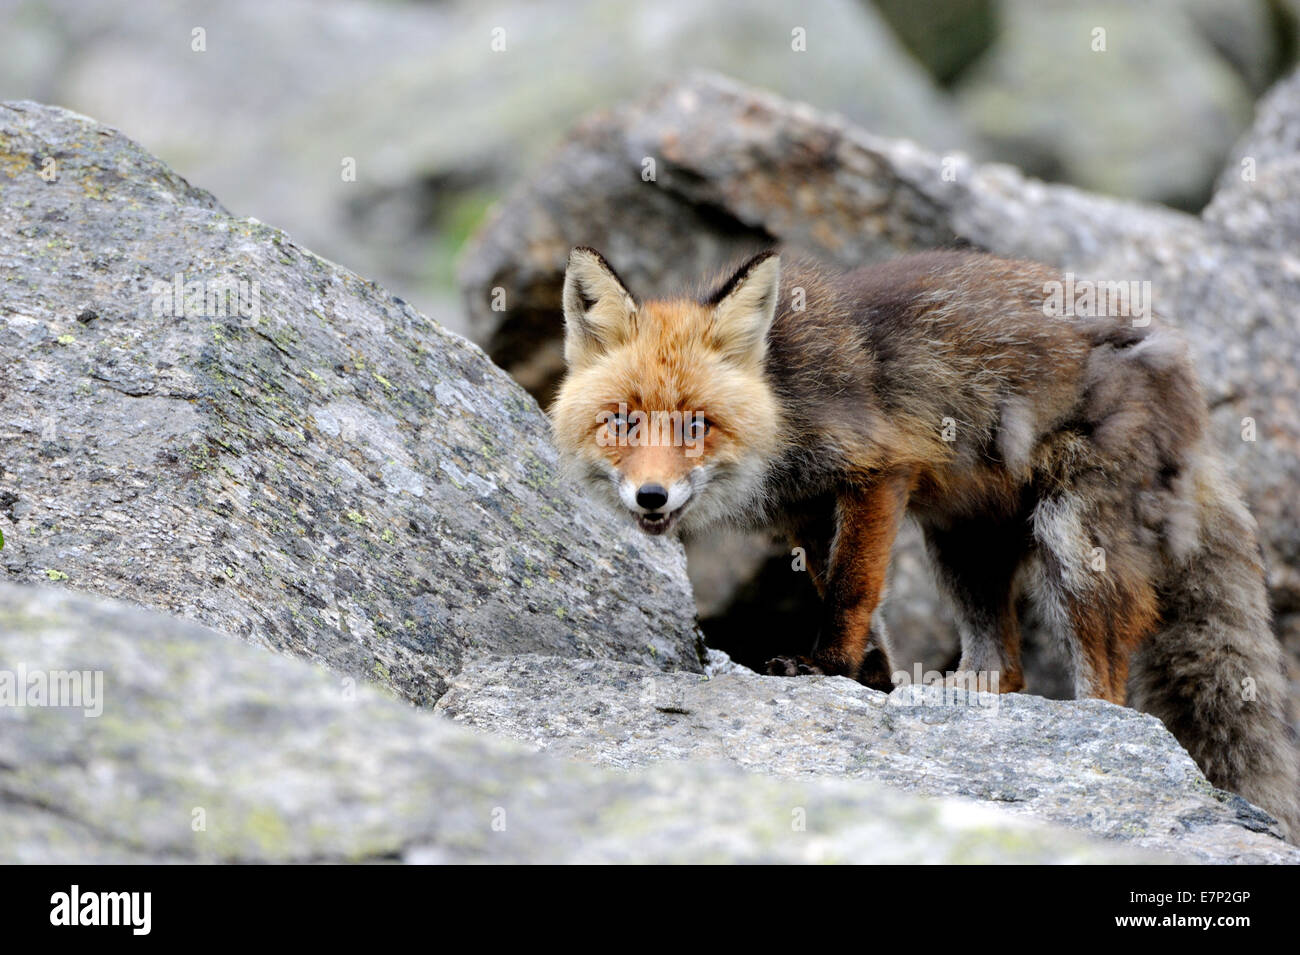 Red fox, fox, predator, canids, Crafty, European fox, Vulpes vulpes, foxes, animal, wild animal, animals, Germany Stock Photo